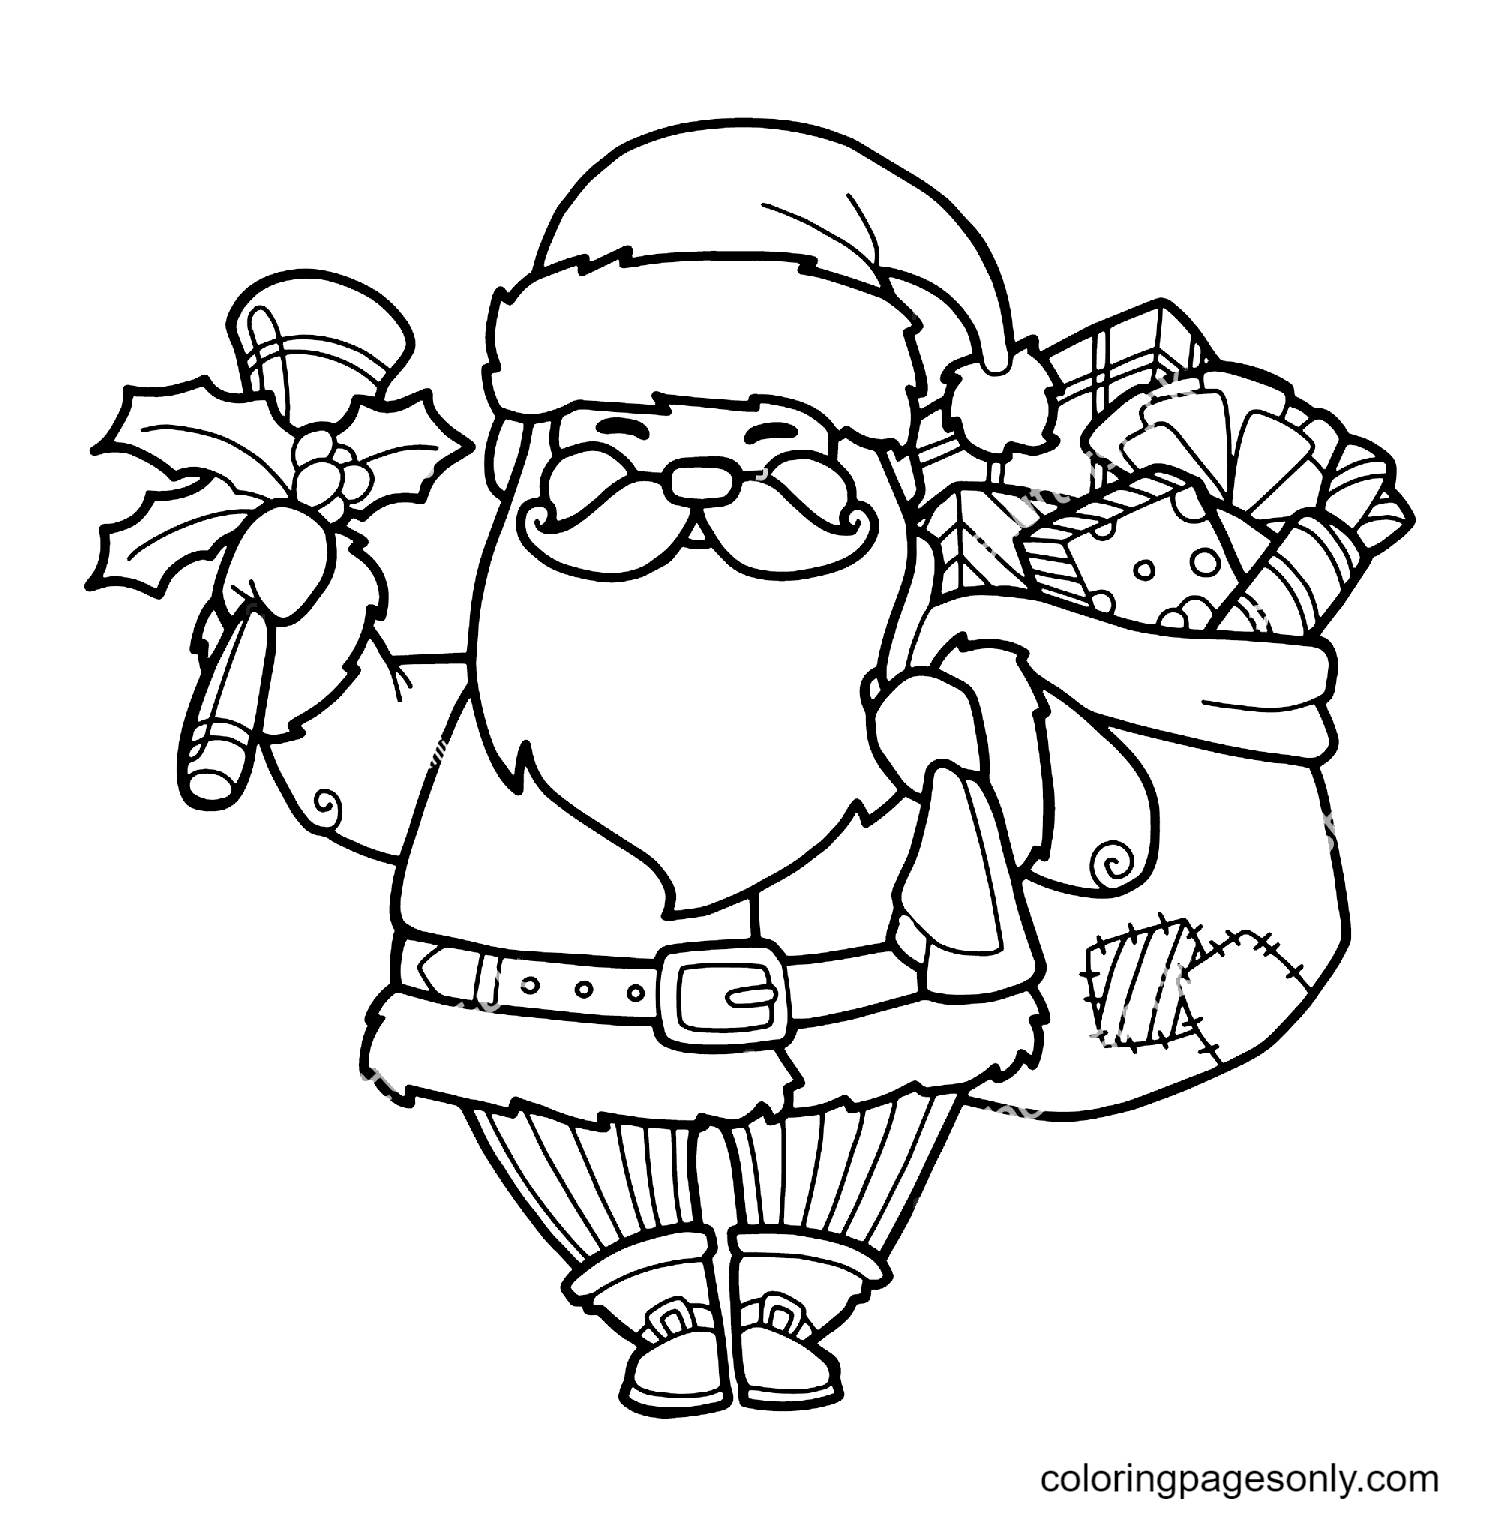 Дед Мороз с подарками от Деда Мороза